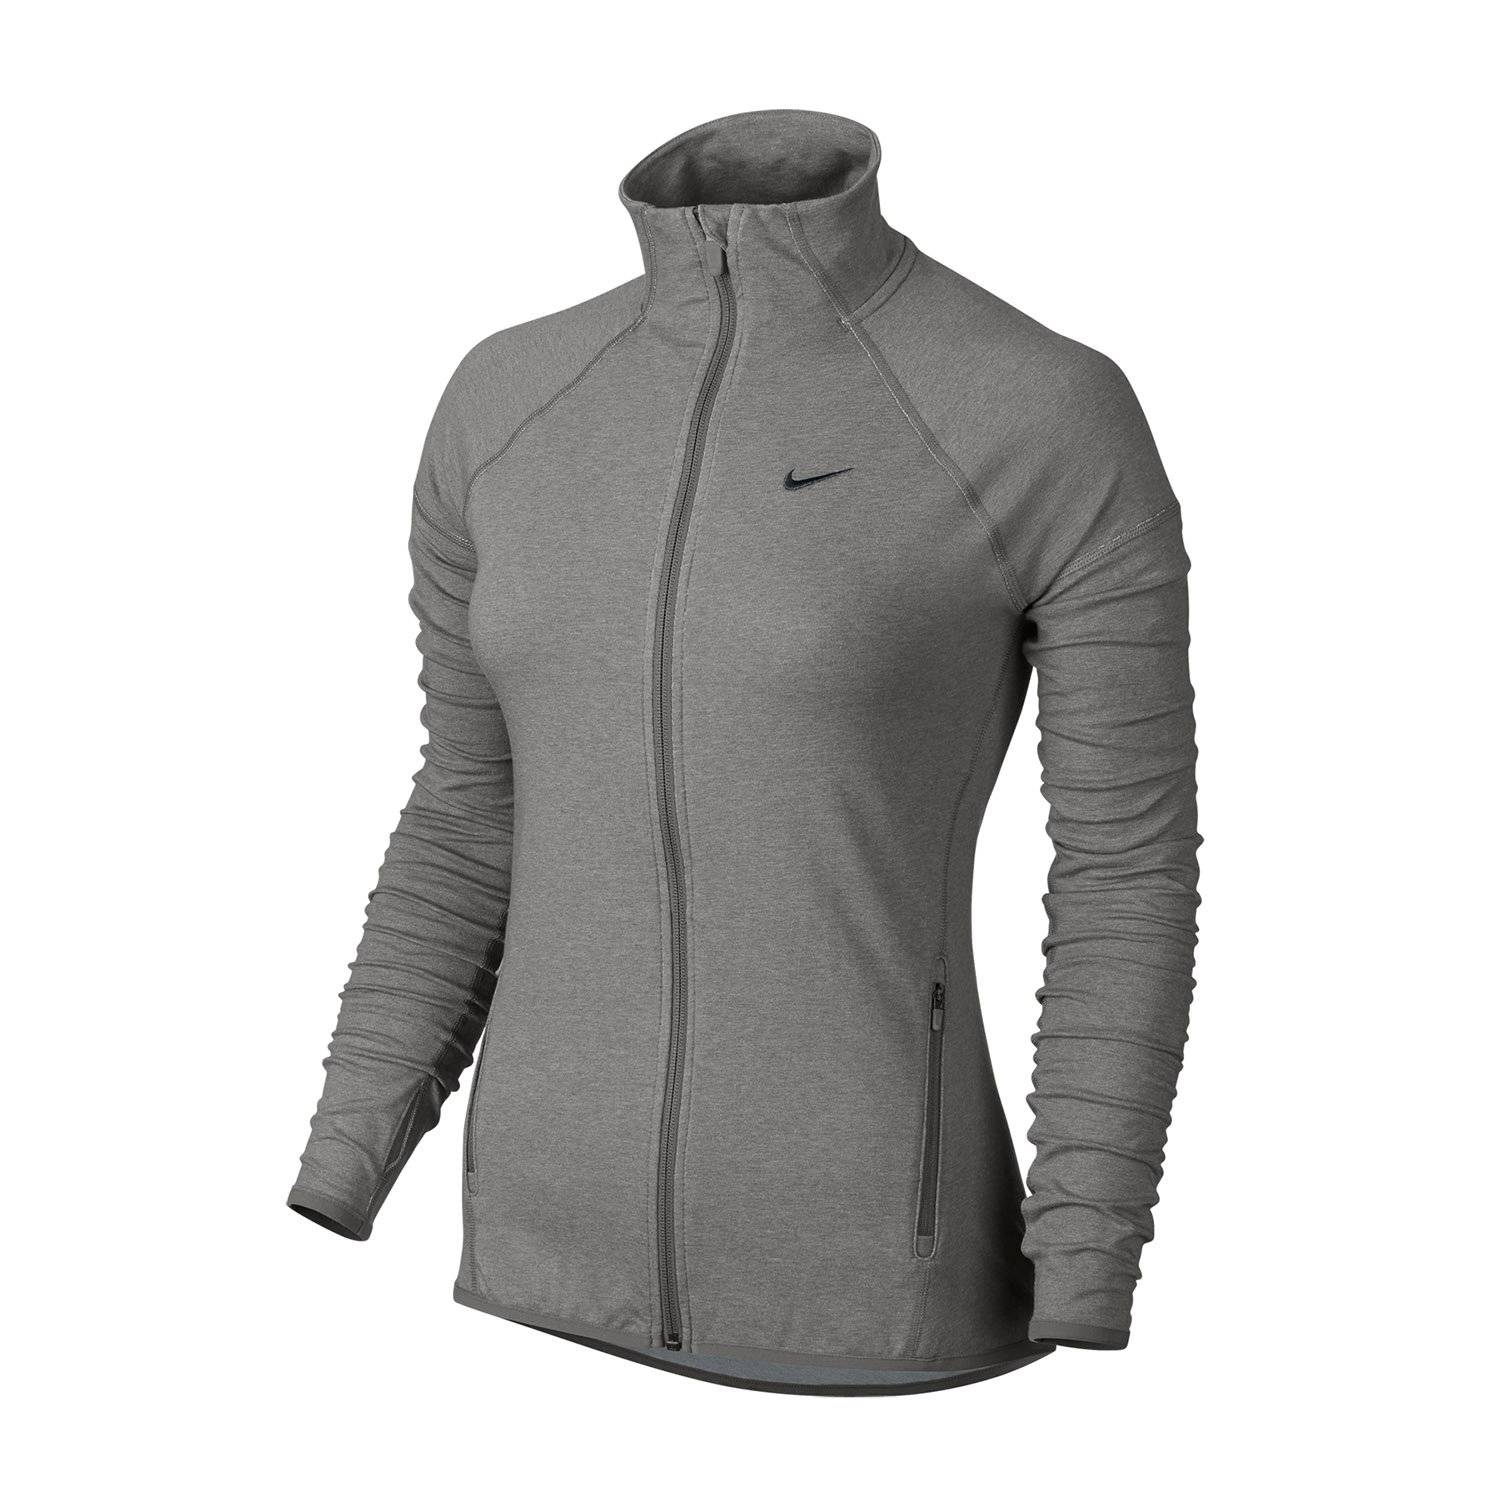 Nike Women's Dri-FIT Cotton Full Zip Jacket